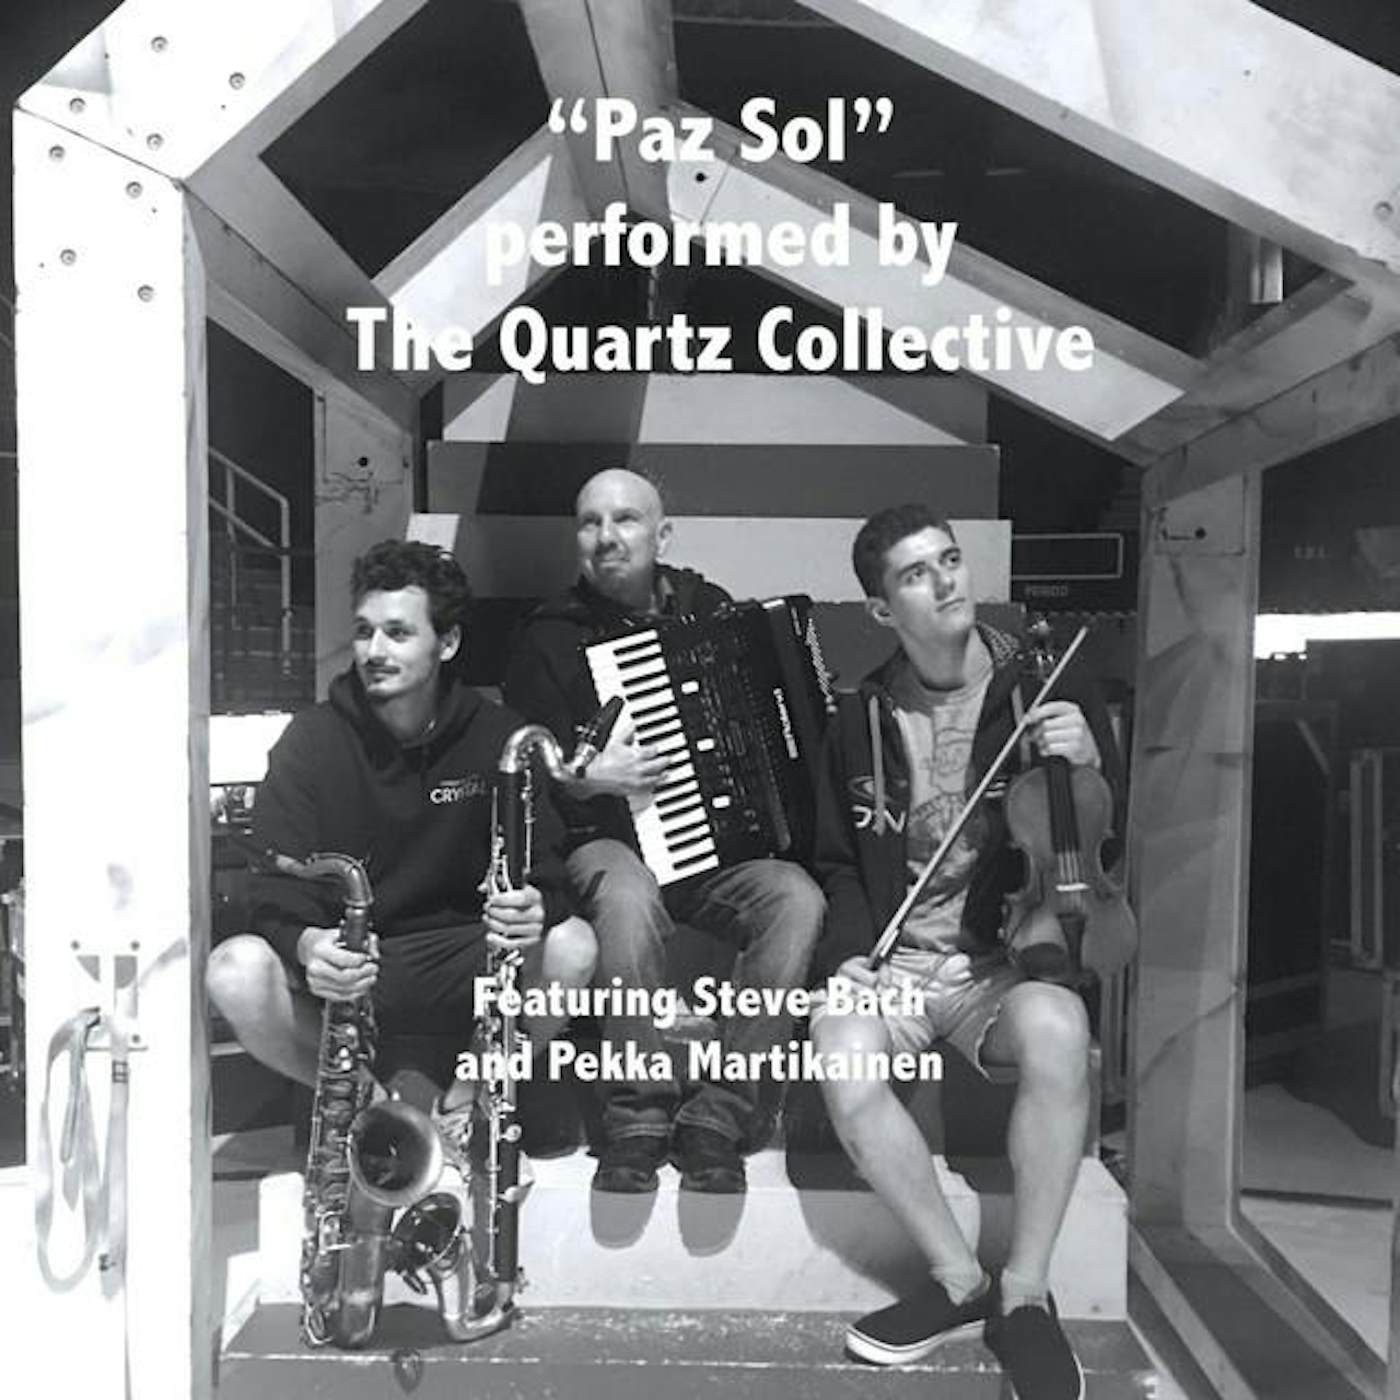 The Quartz Collective